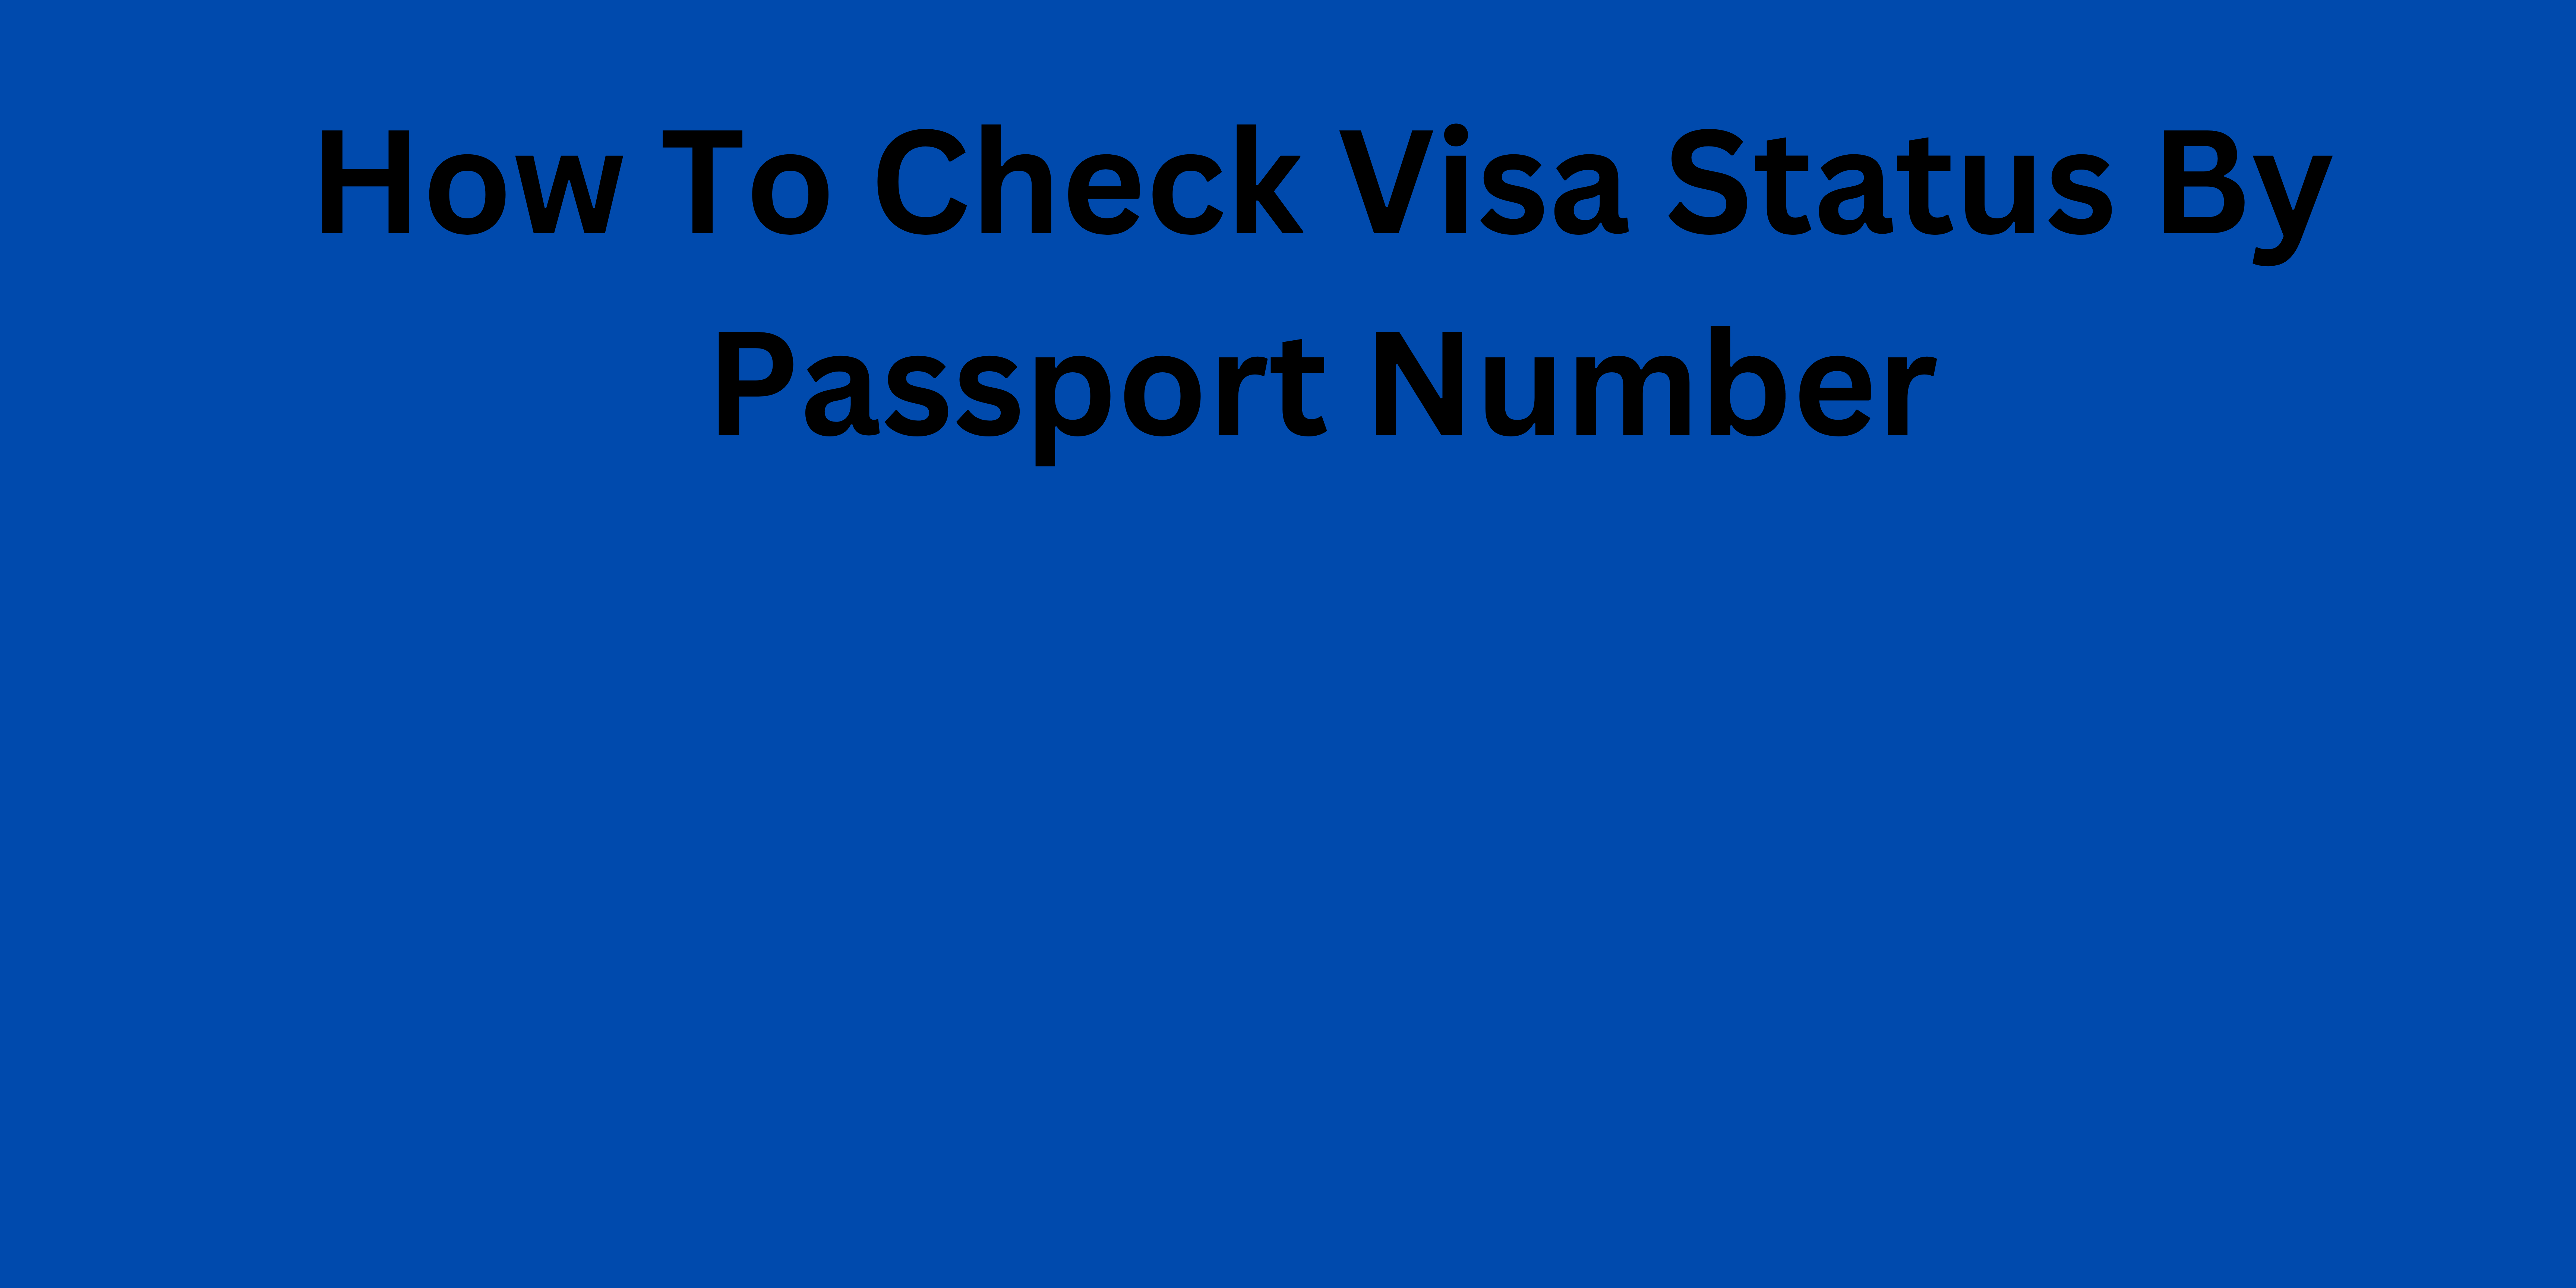 visit visa status by passport number